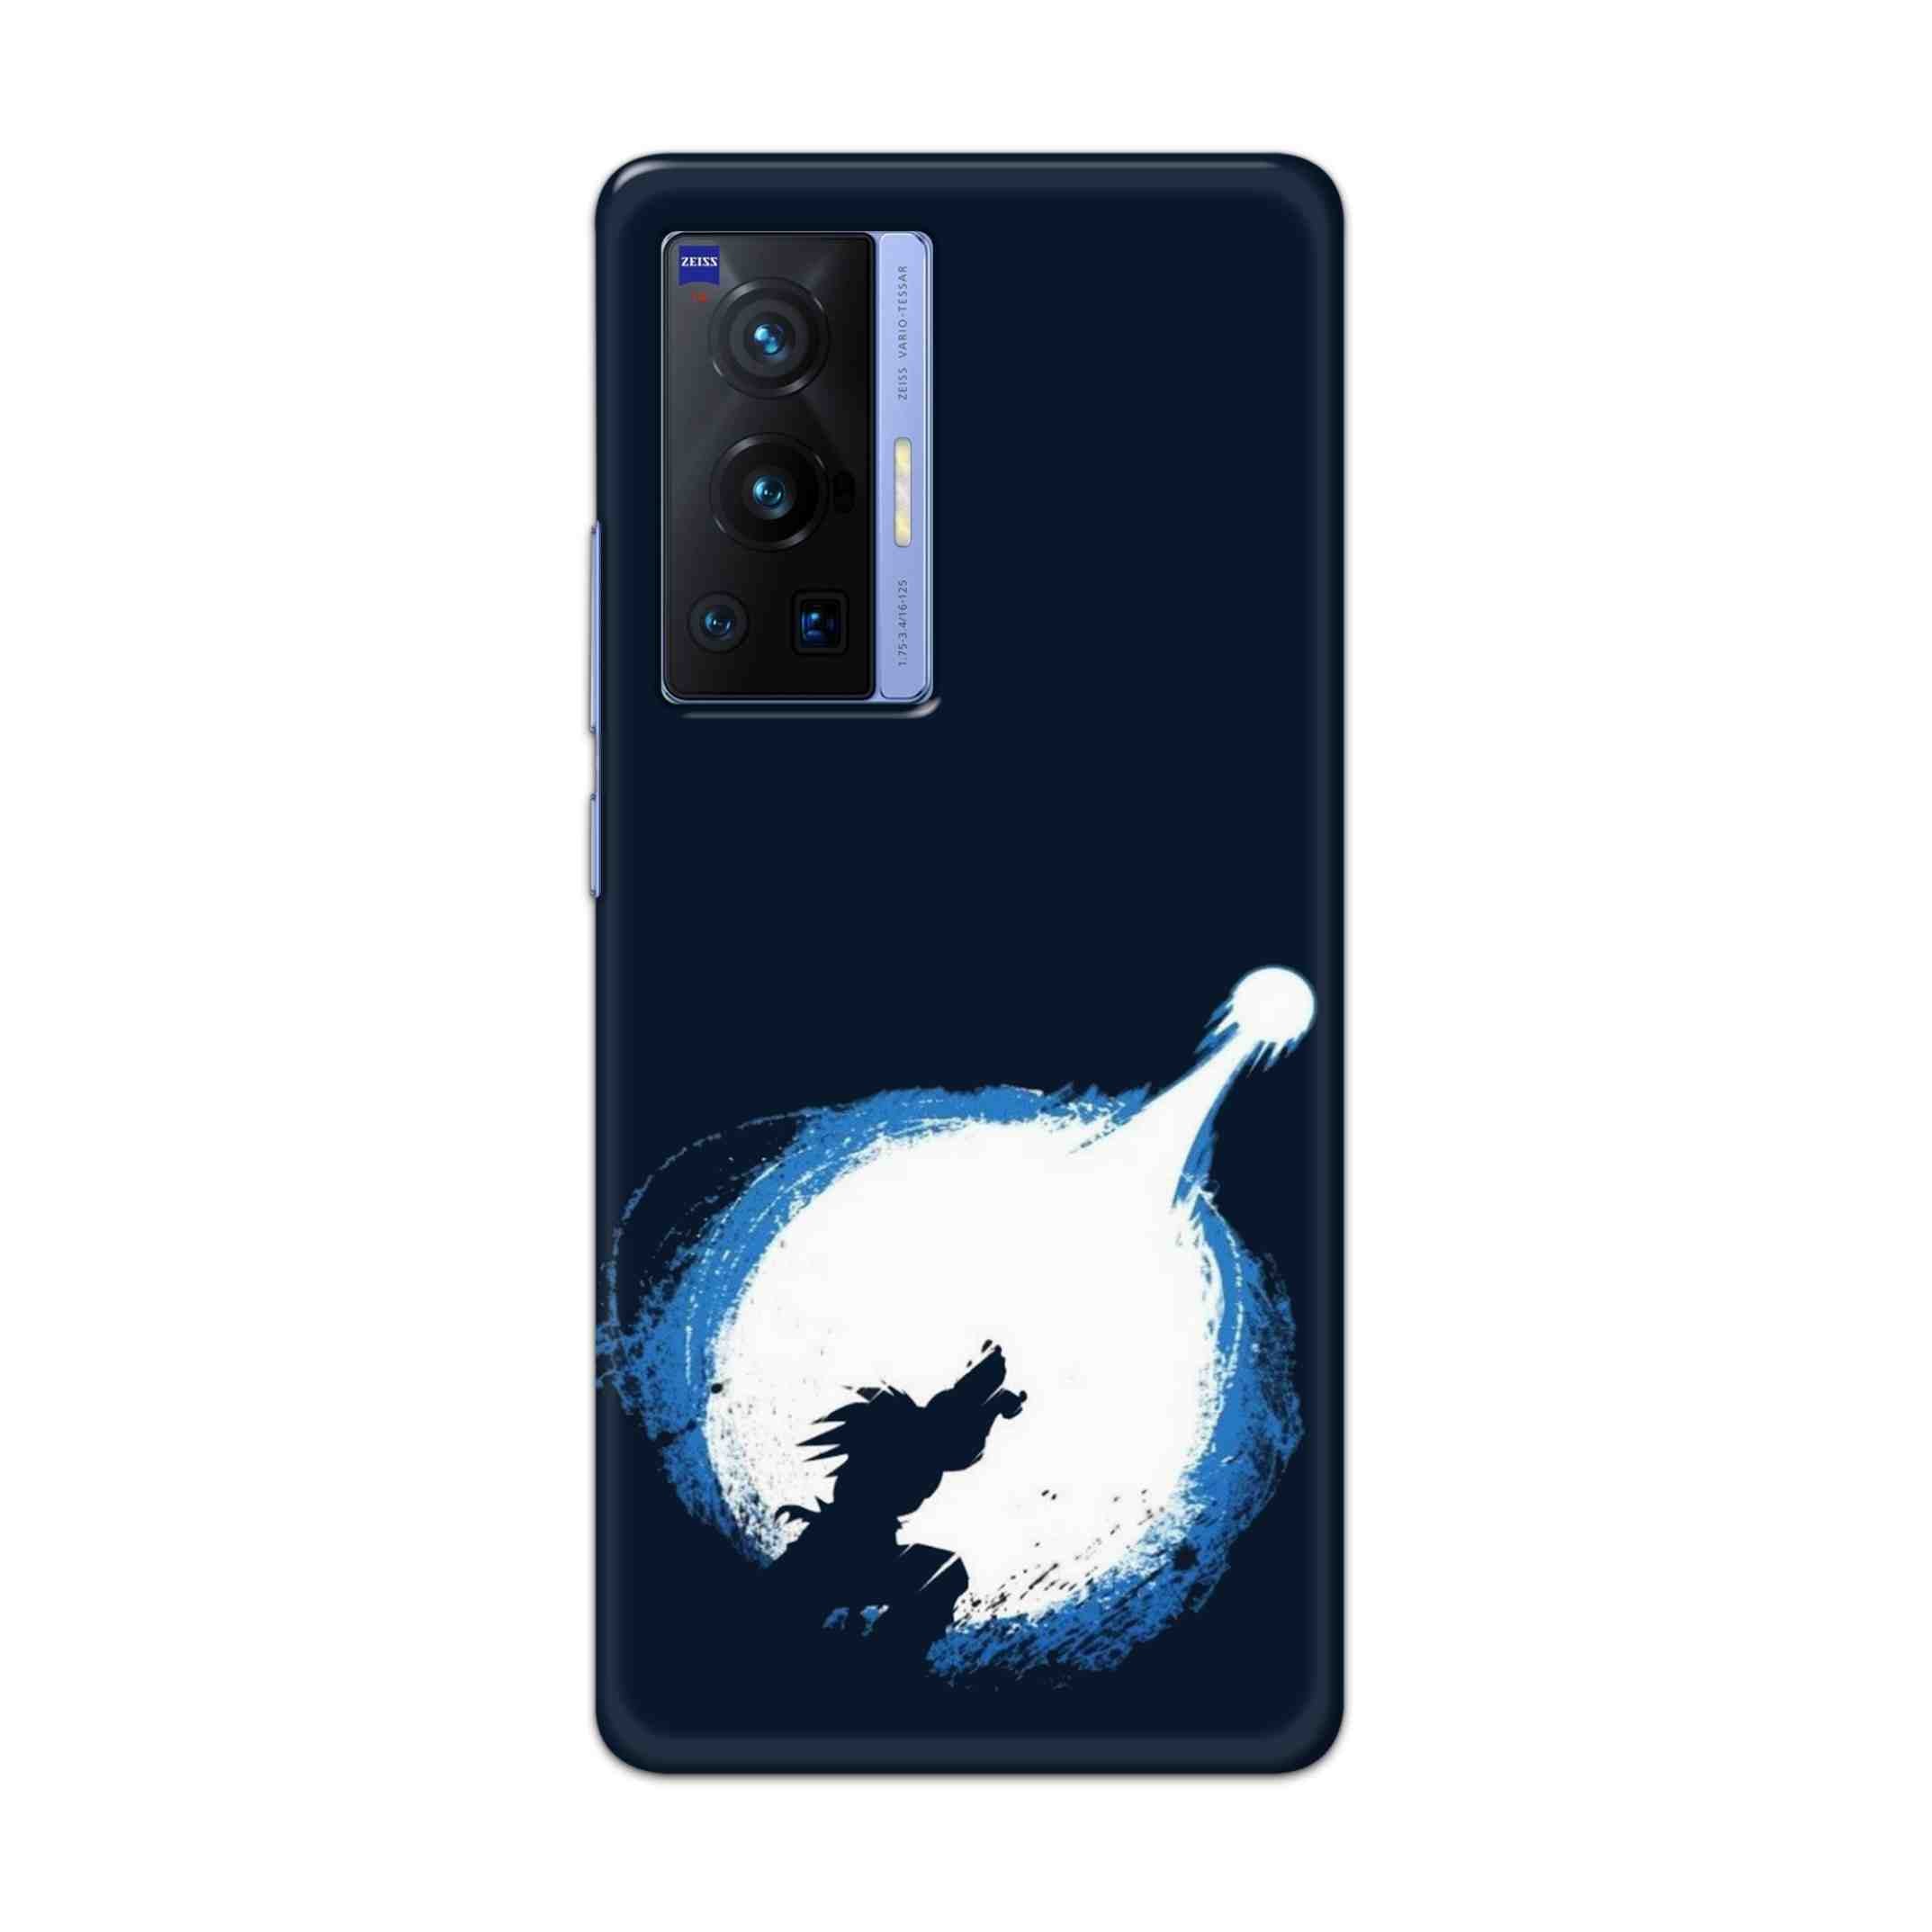 Buy Goku Power Hard Back Mobile Phone Case Cover For Vivo X70 Pro Online